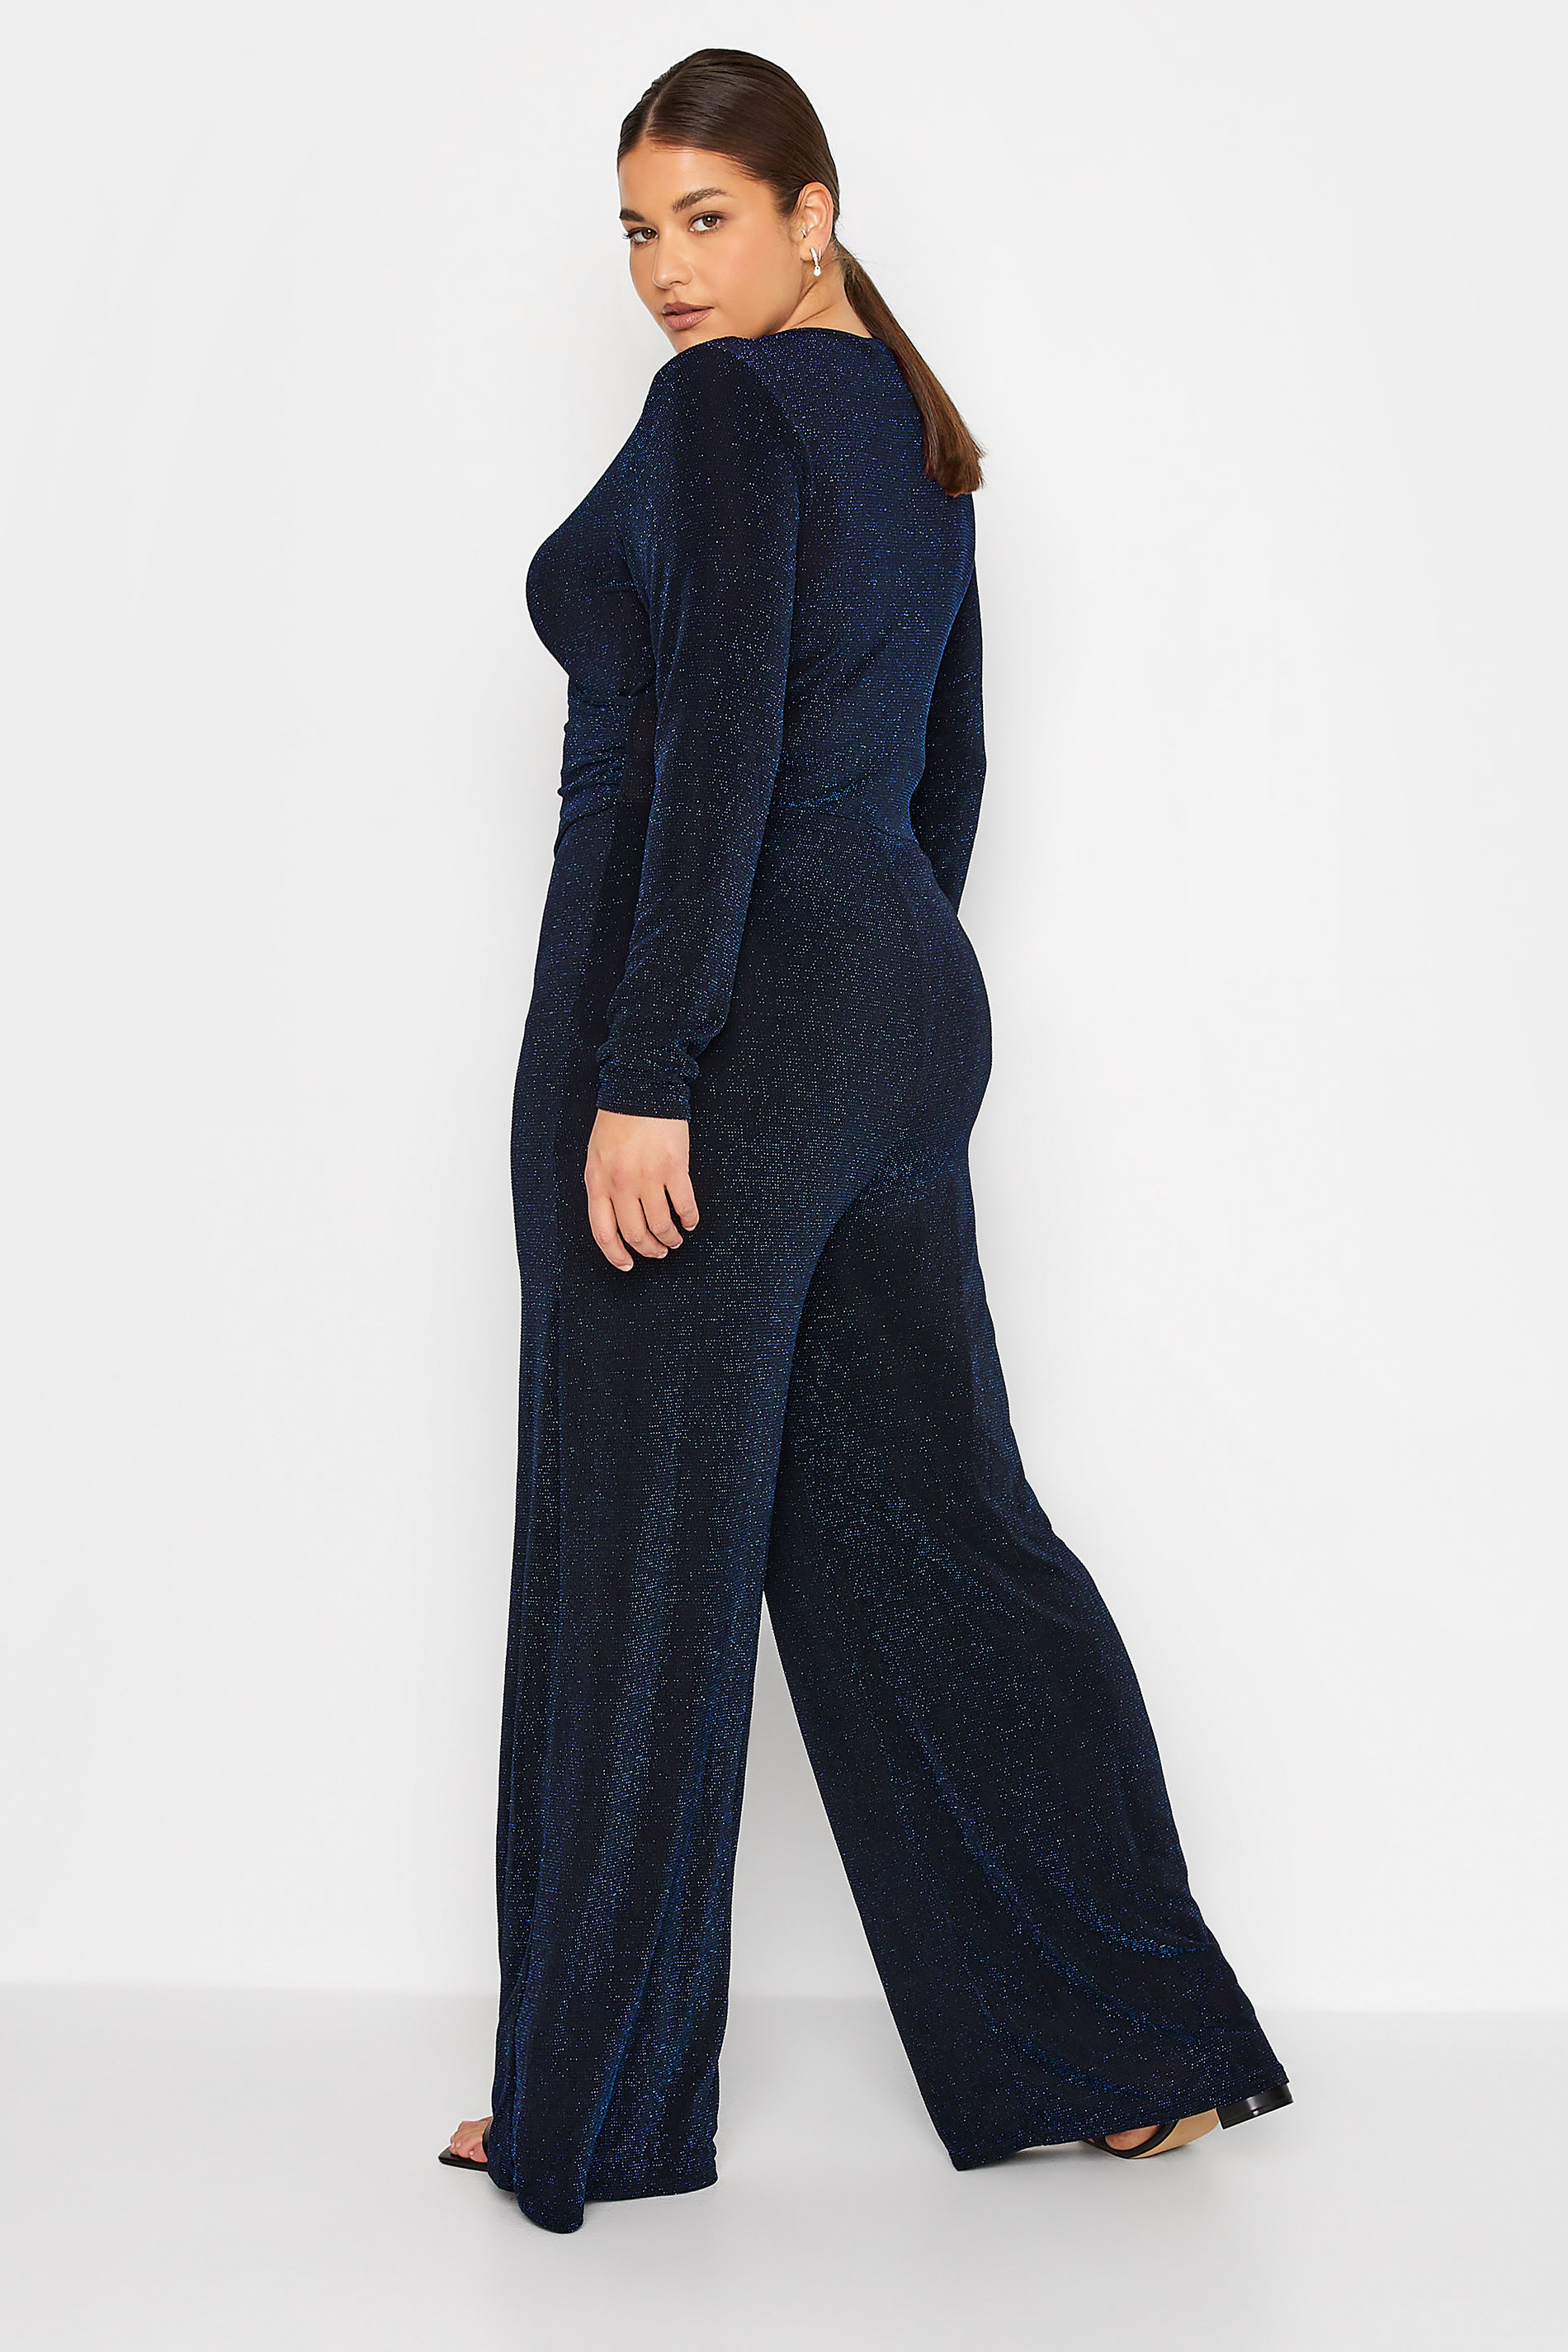 LTS Tall Women's Black & Blue Glitter Wrap Jumpsuit | Long Tall Sally 3